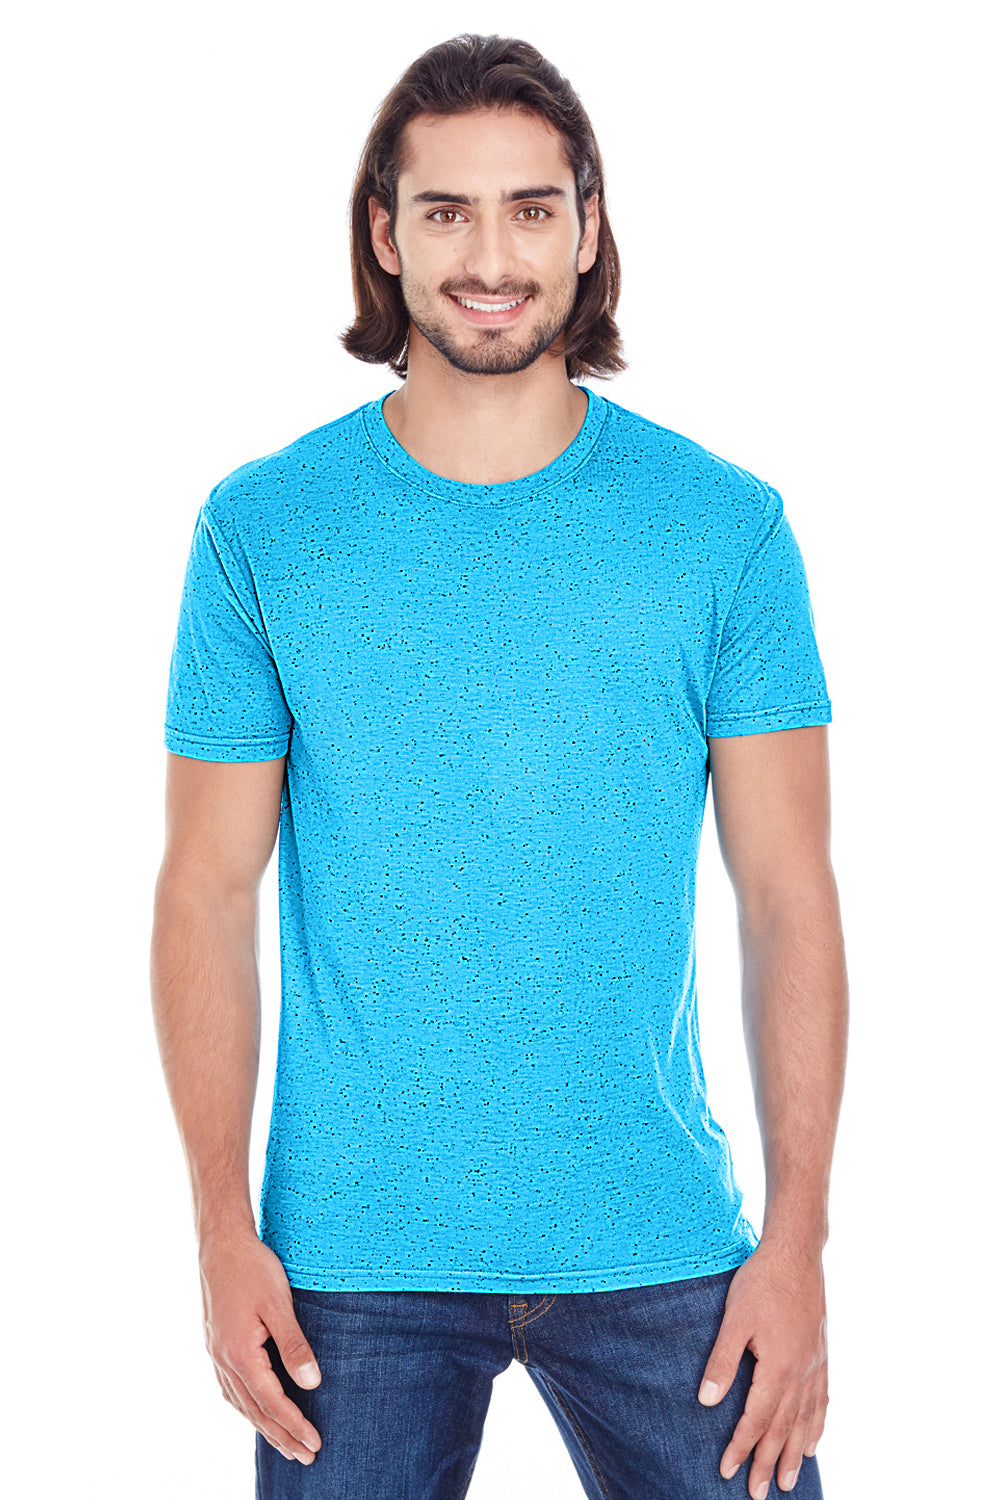 Threadfast Apparel 103A Mens Fleck Short Sleeve Crewneck T-Shirt Turquoise Blue Front